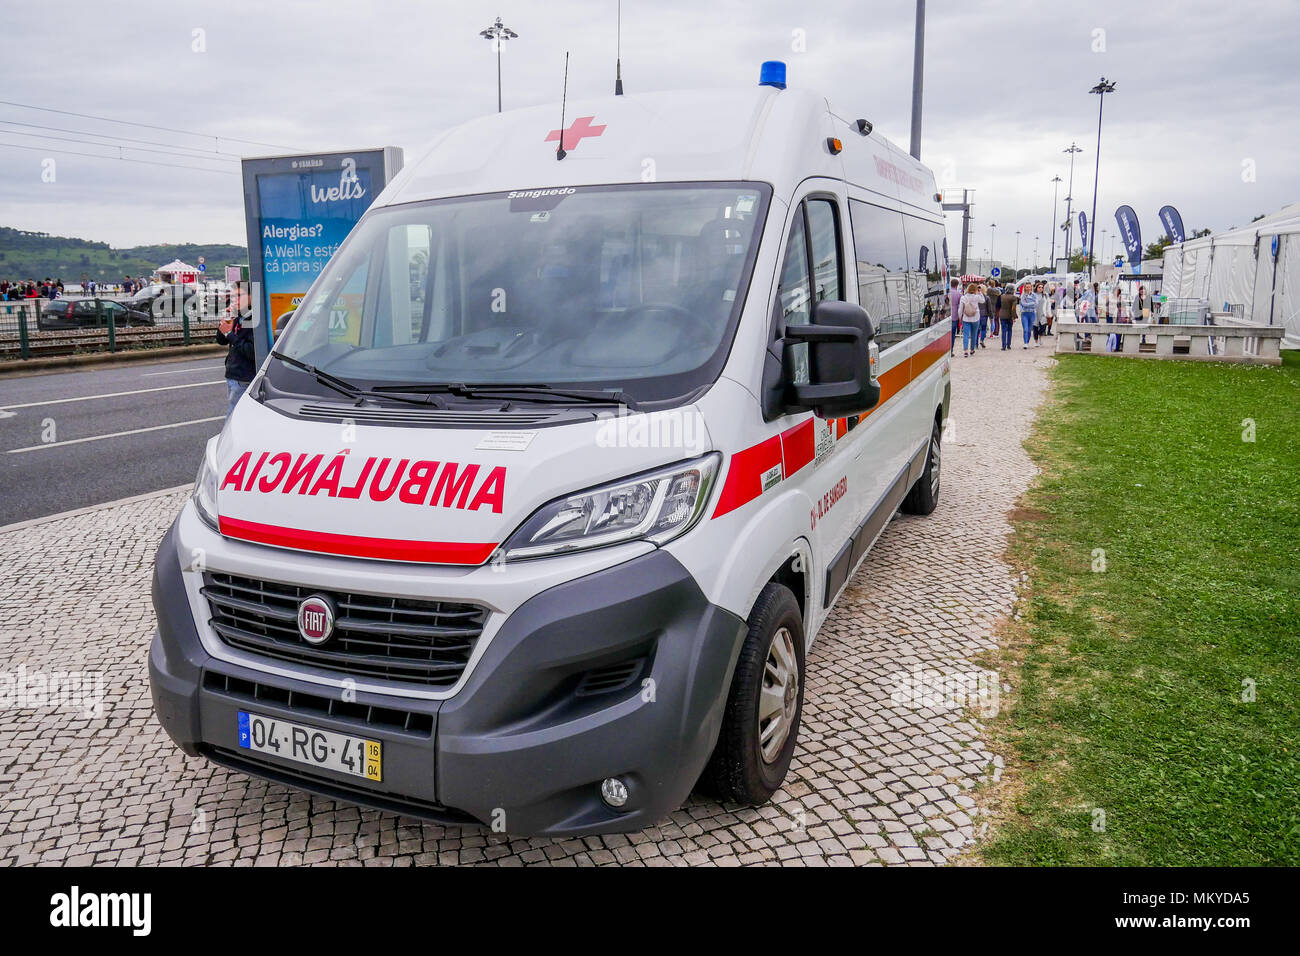 Ambulanza di emergenza, quartiere Belem, Lisbona, Portogallo Foto Stock